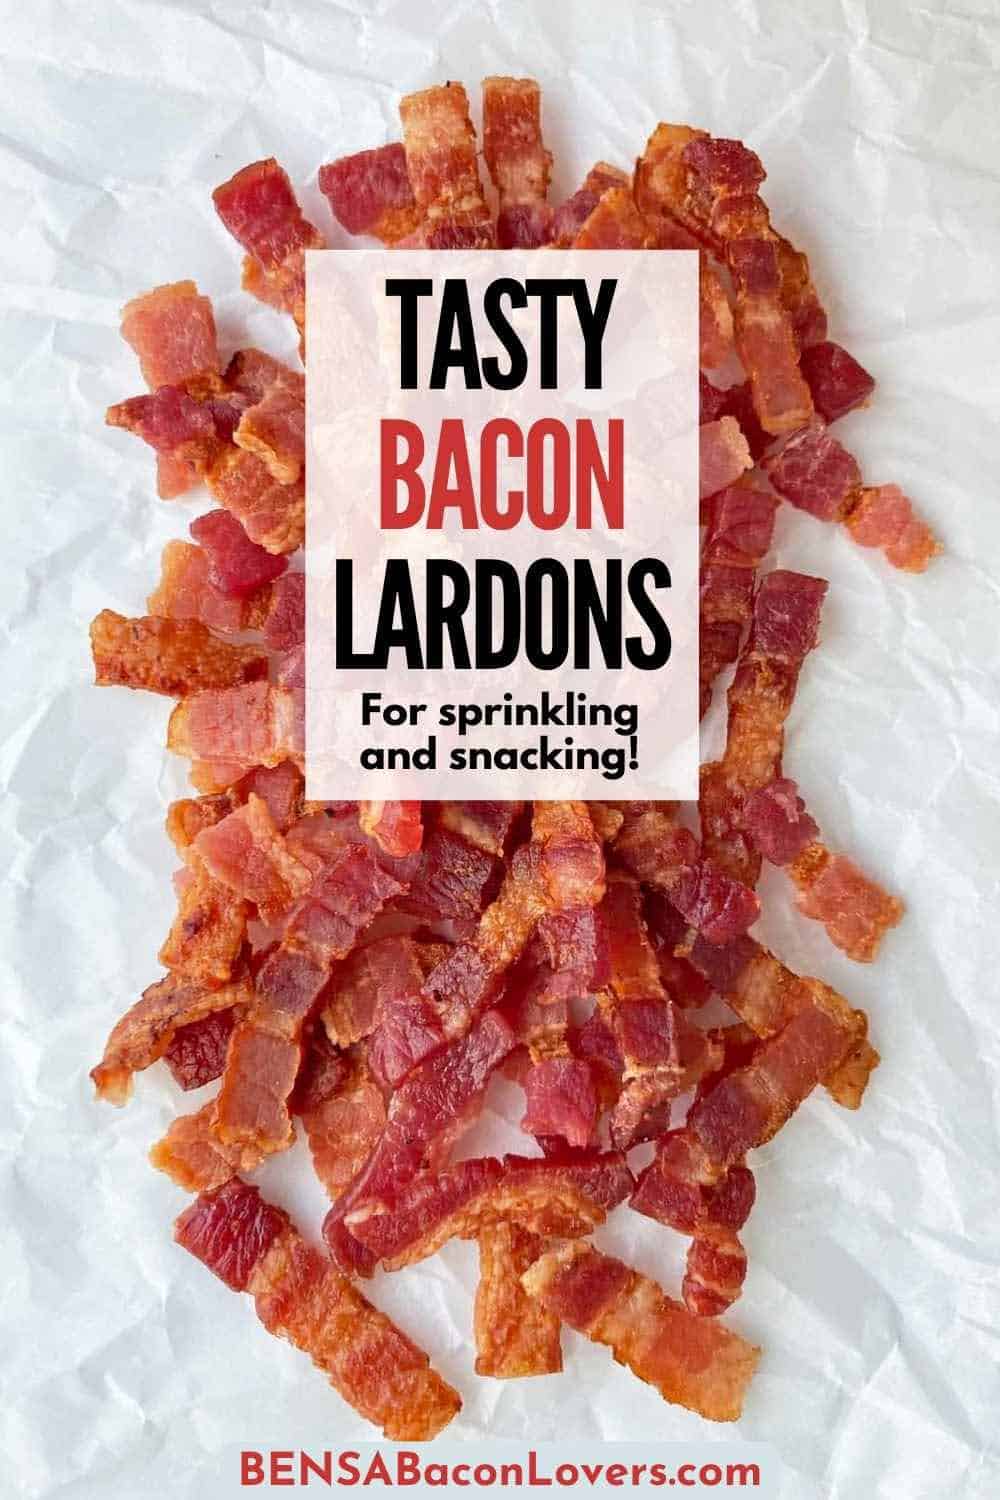 A pile of bacon lardons on white paper.